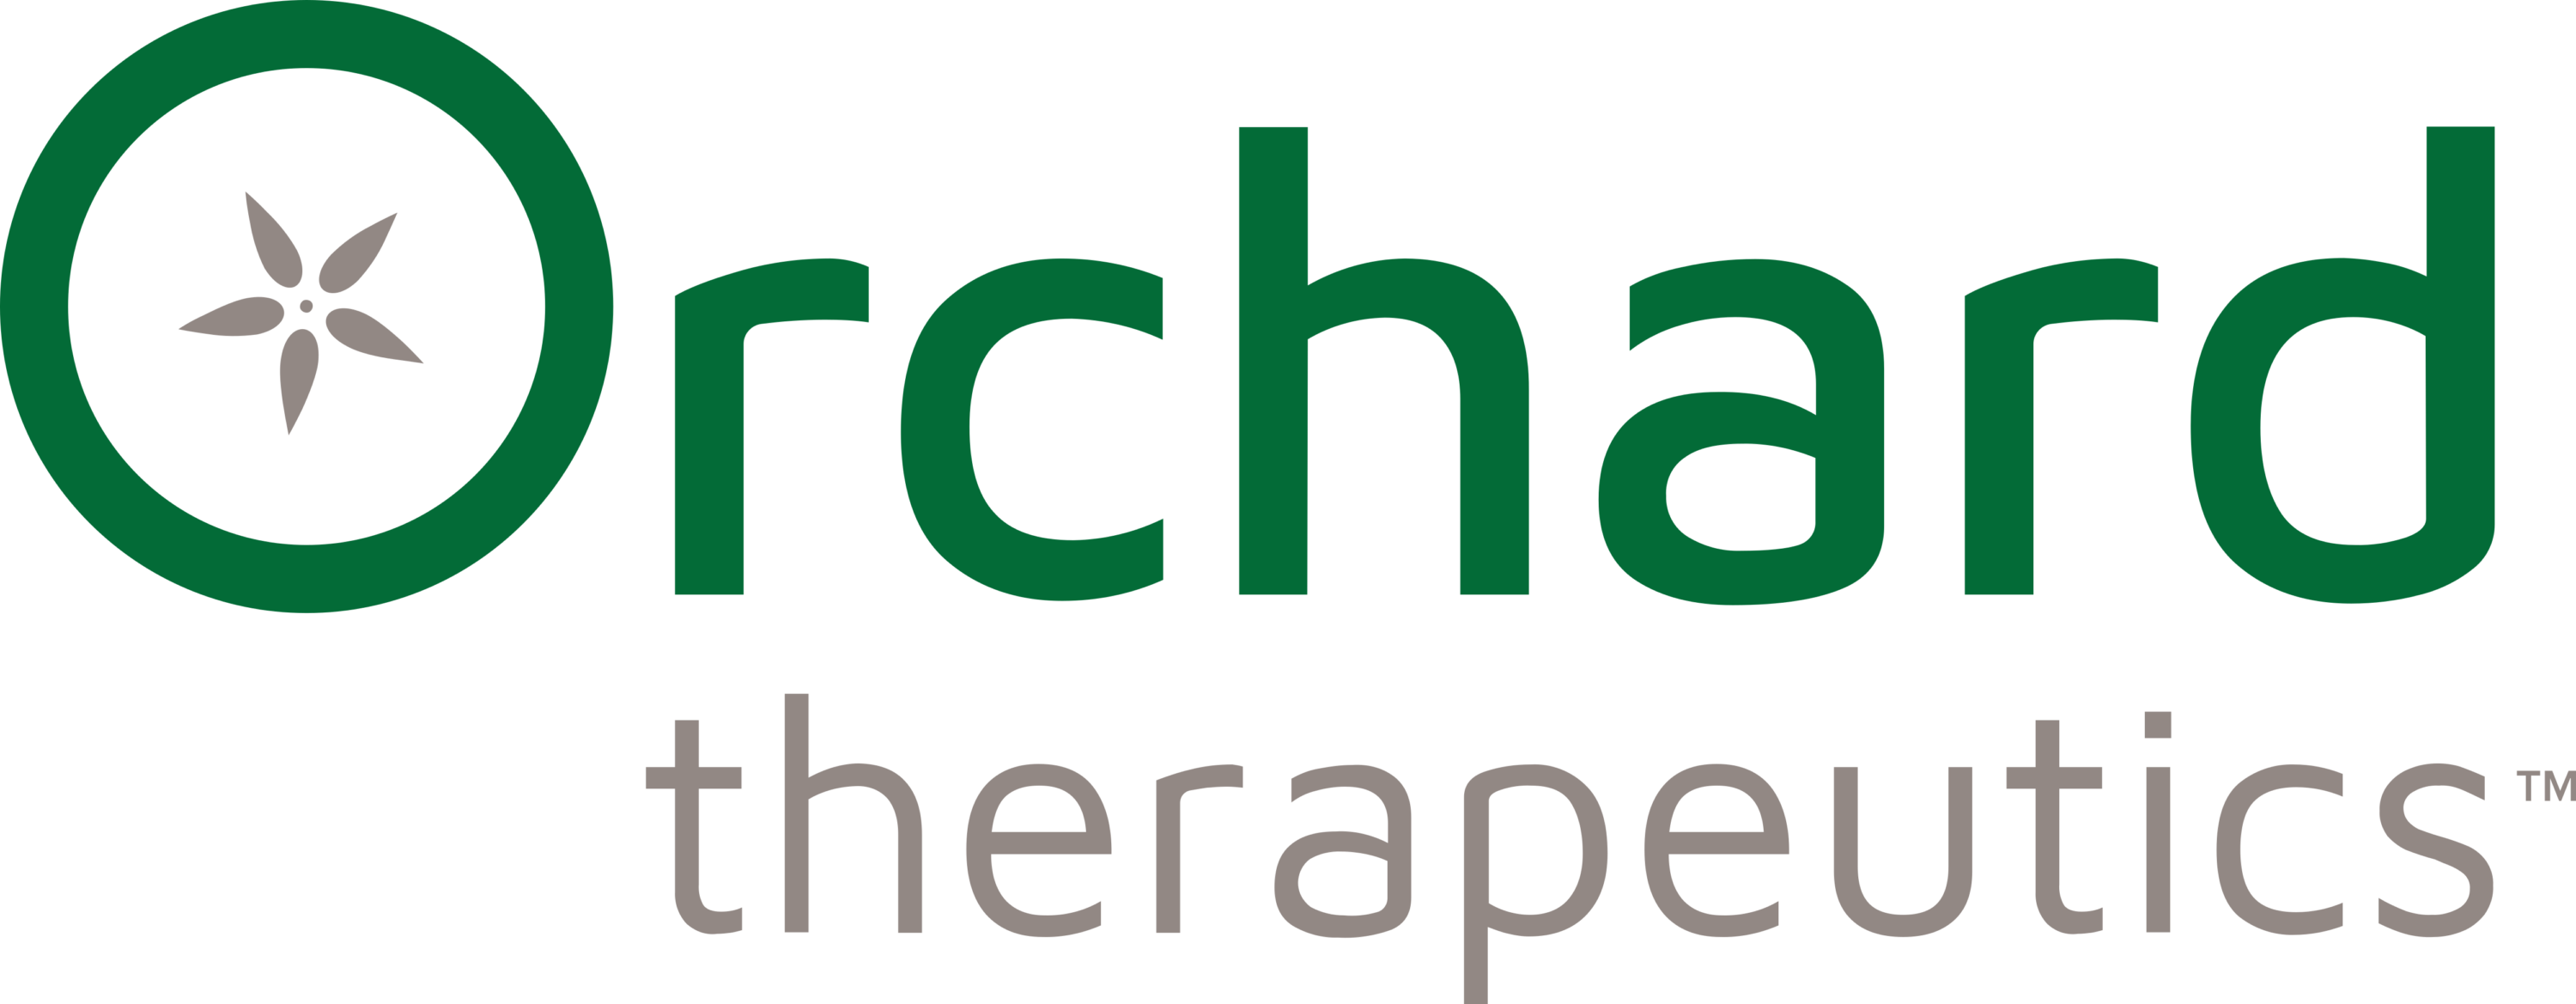 Orchard Therapeutics Logo